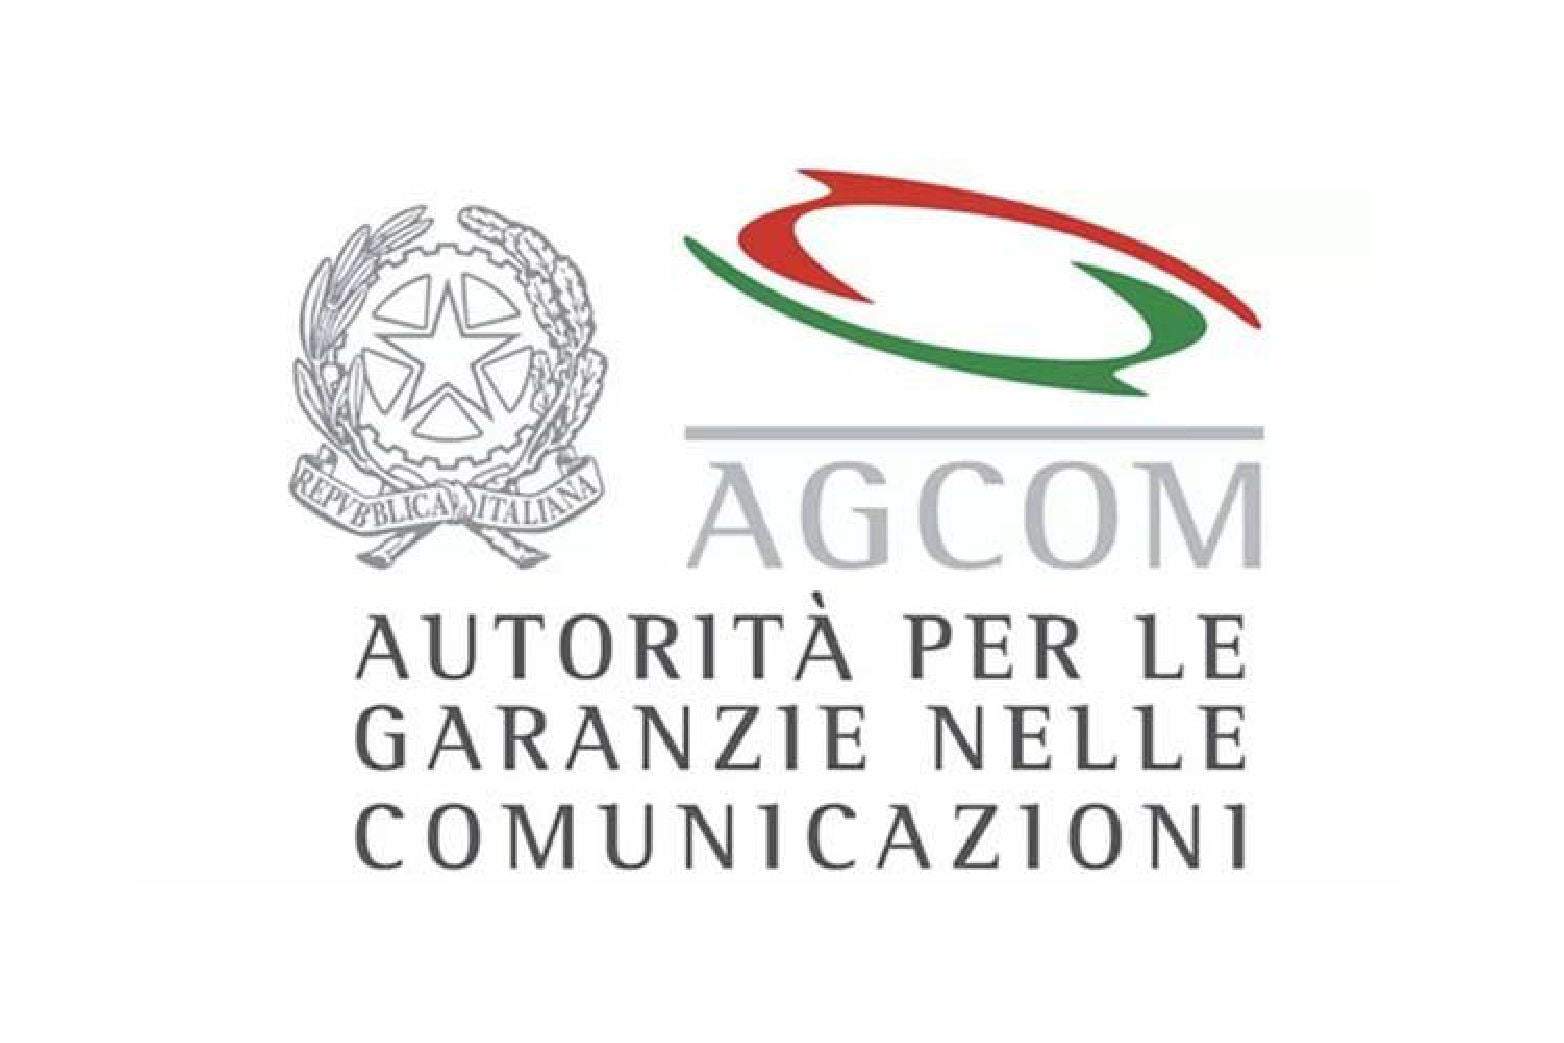 Il sito Agcom sembra offline